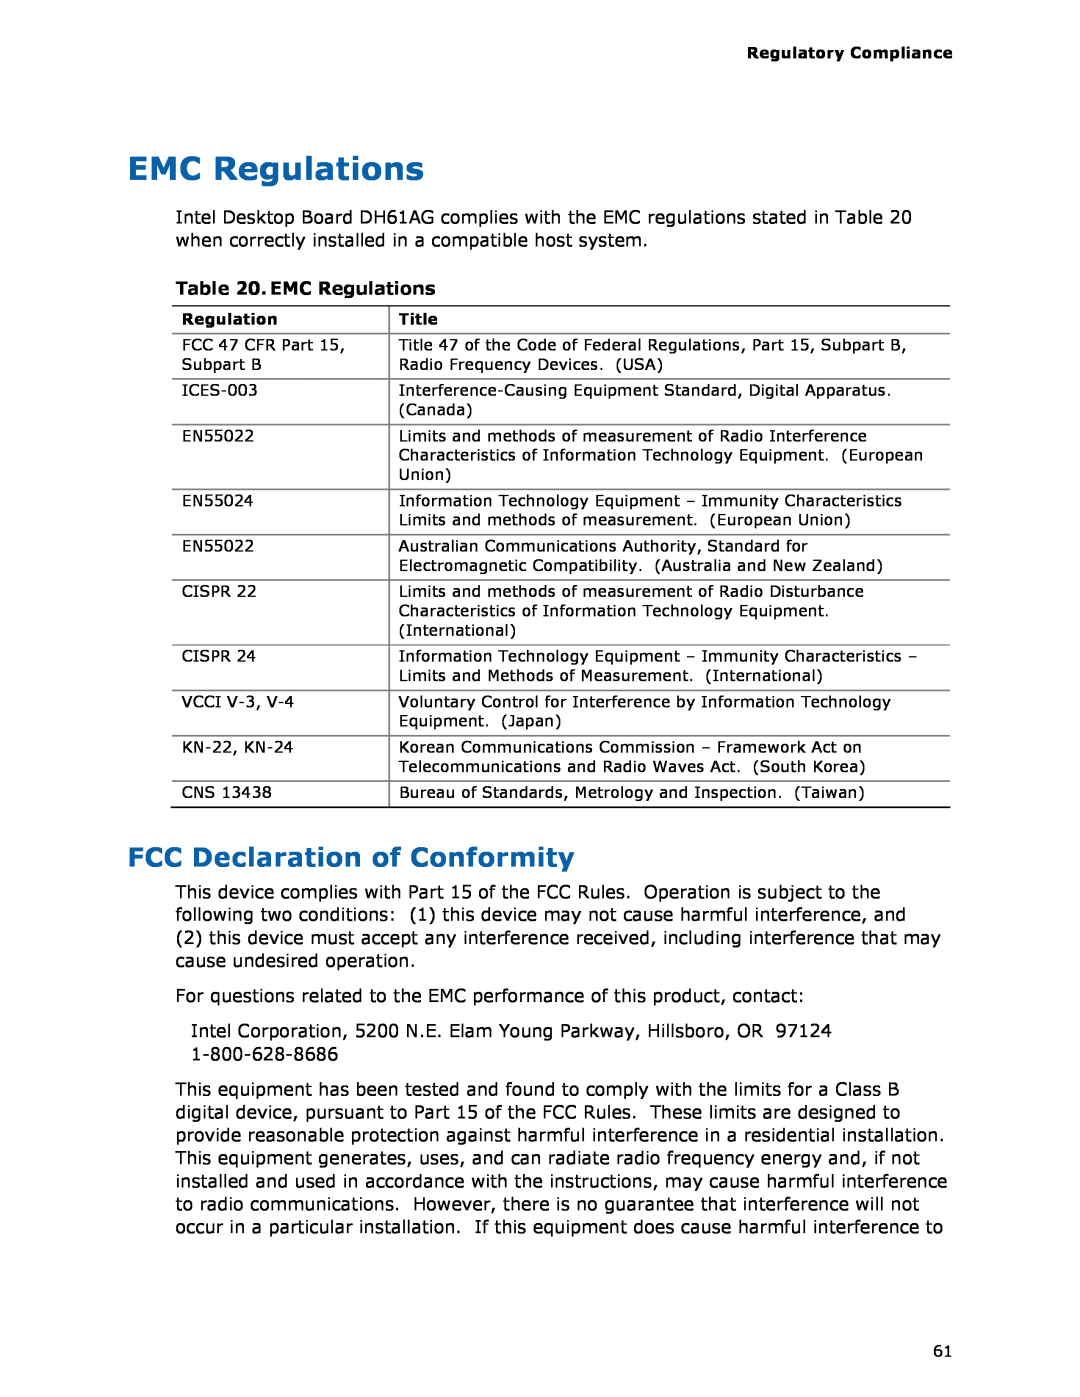 Intel BOXDH61AG manual EMC Regulations, FCC Declaration of Conformity 